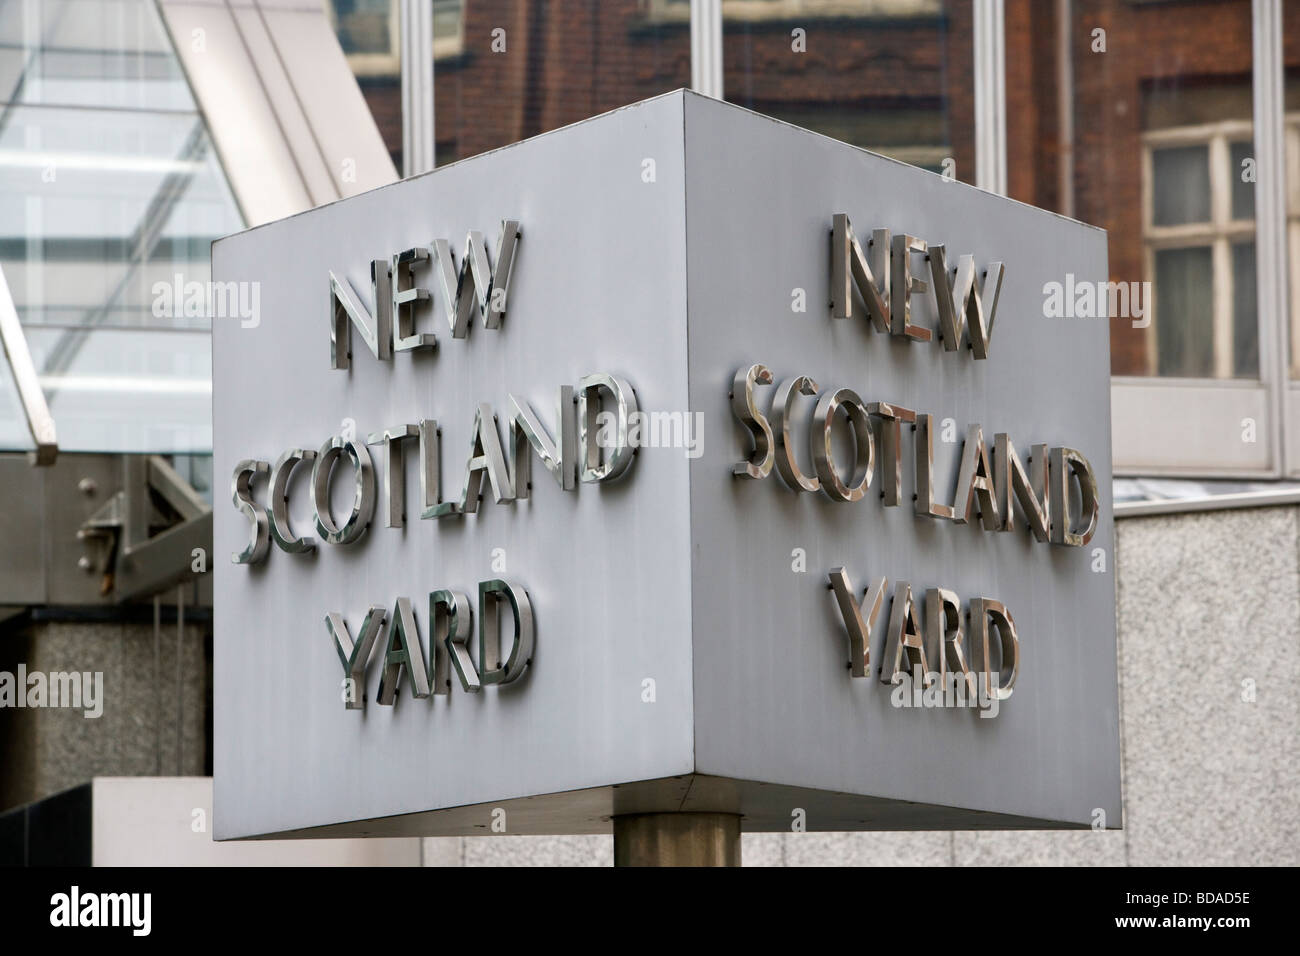 New Scotland Yard Sign The Broadway London England Great Britain Saturday July 04 2009  Stock Photo